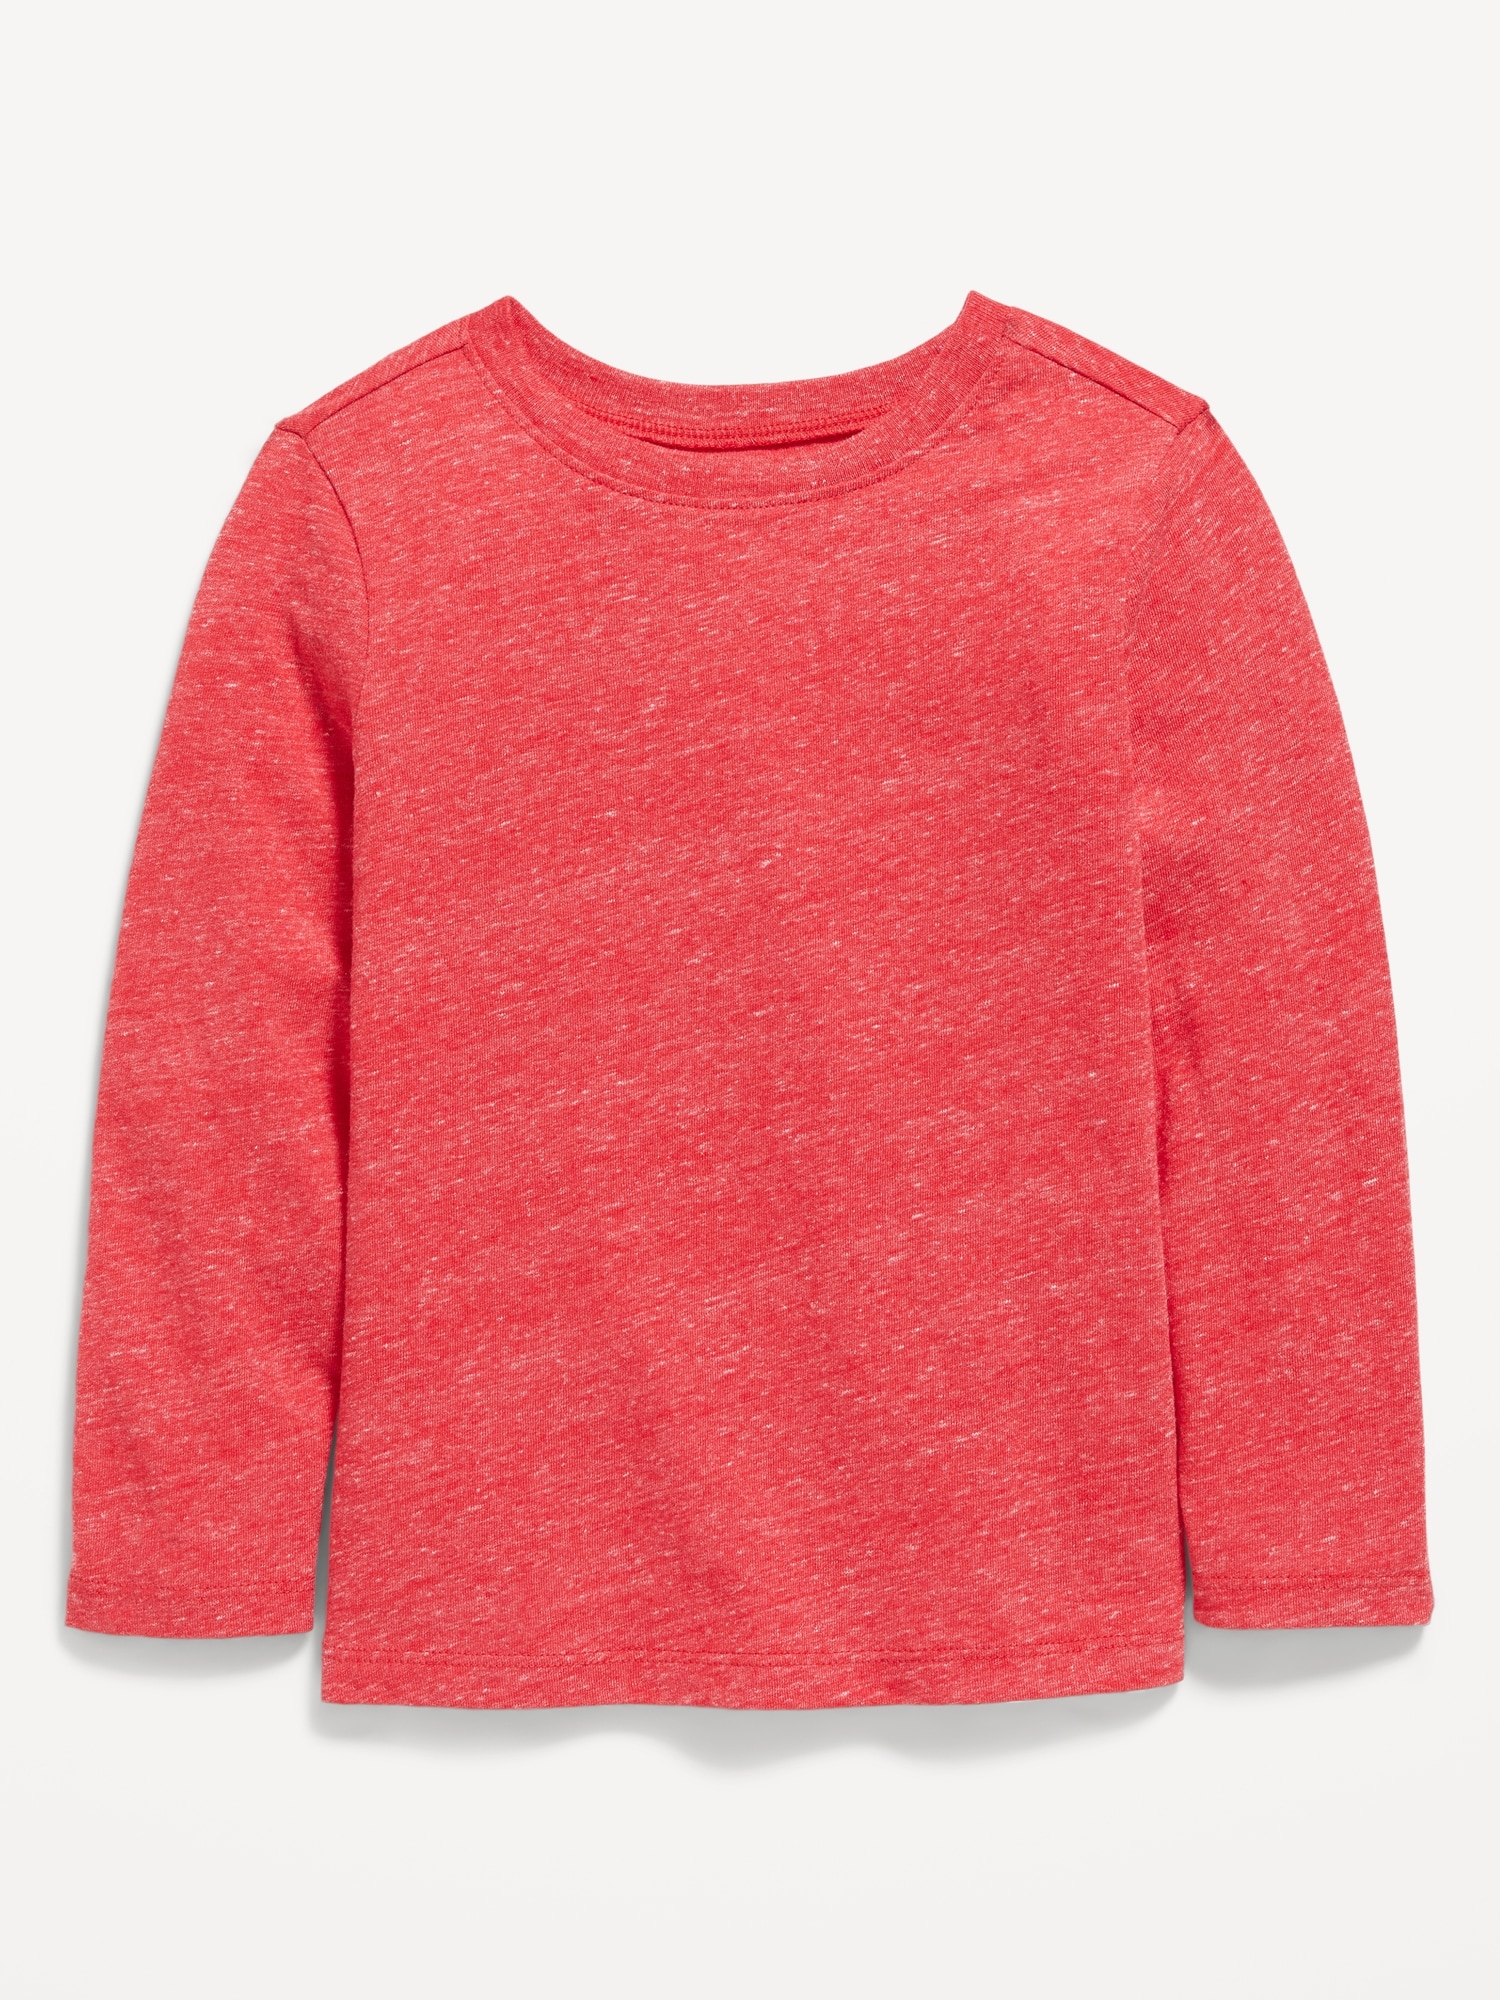 Unisex Long-Sleeve Slub-Knit T-Shirt for Toddler | Old Navy